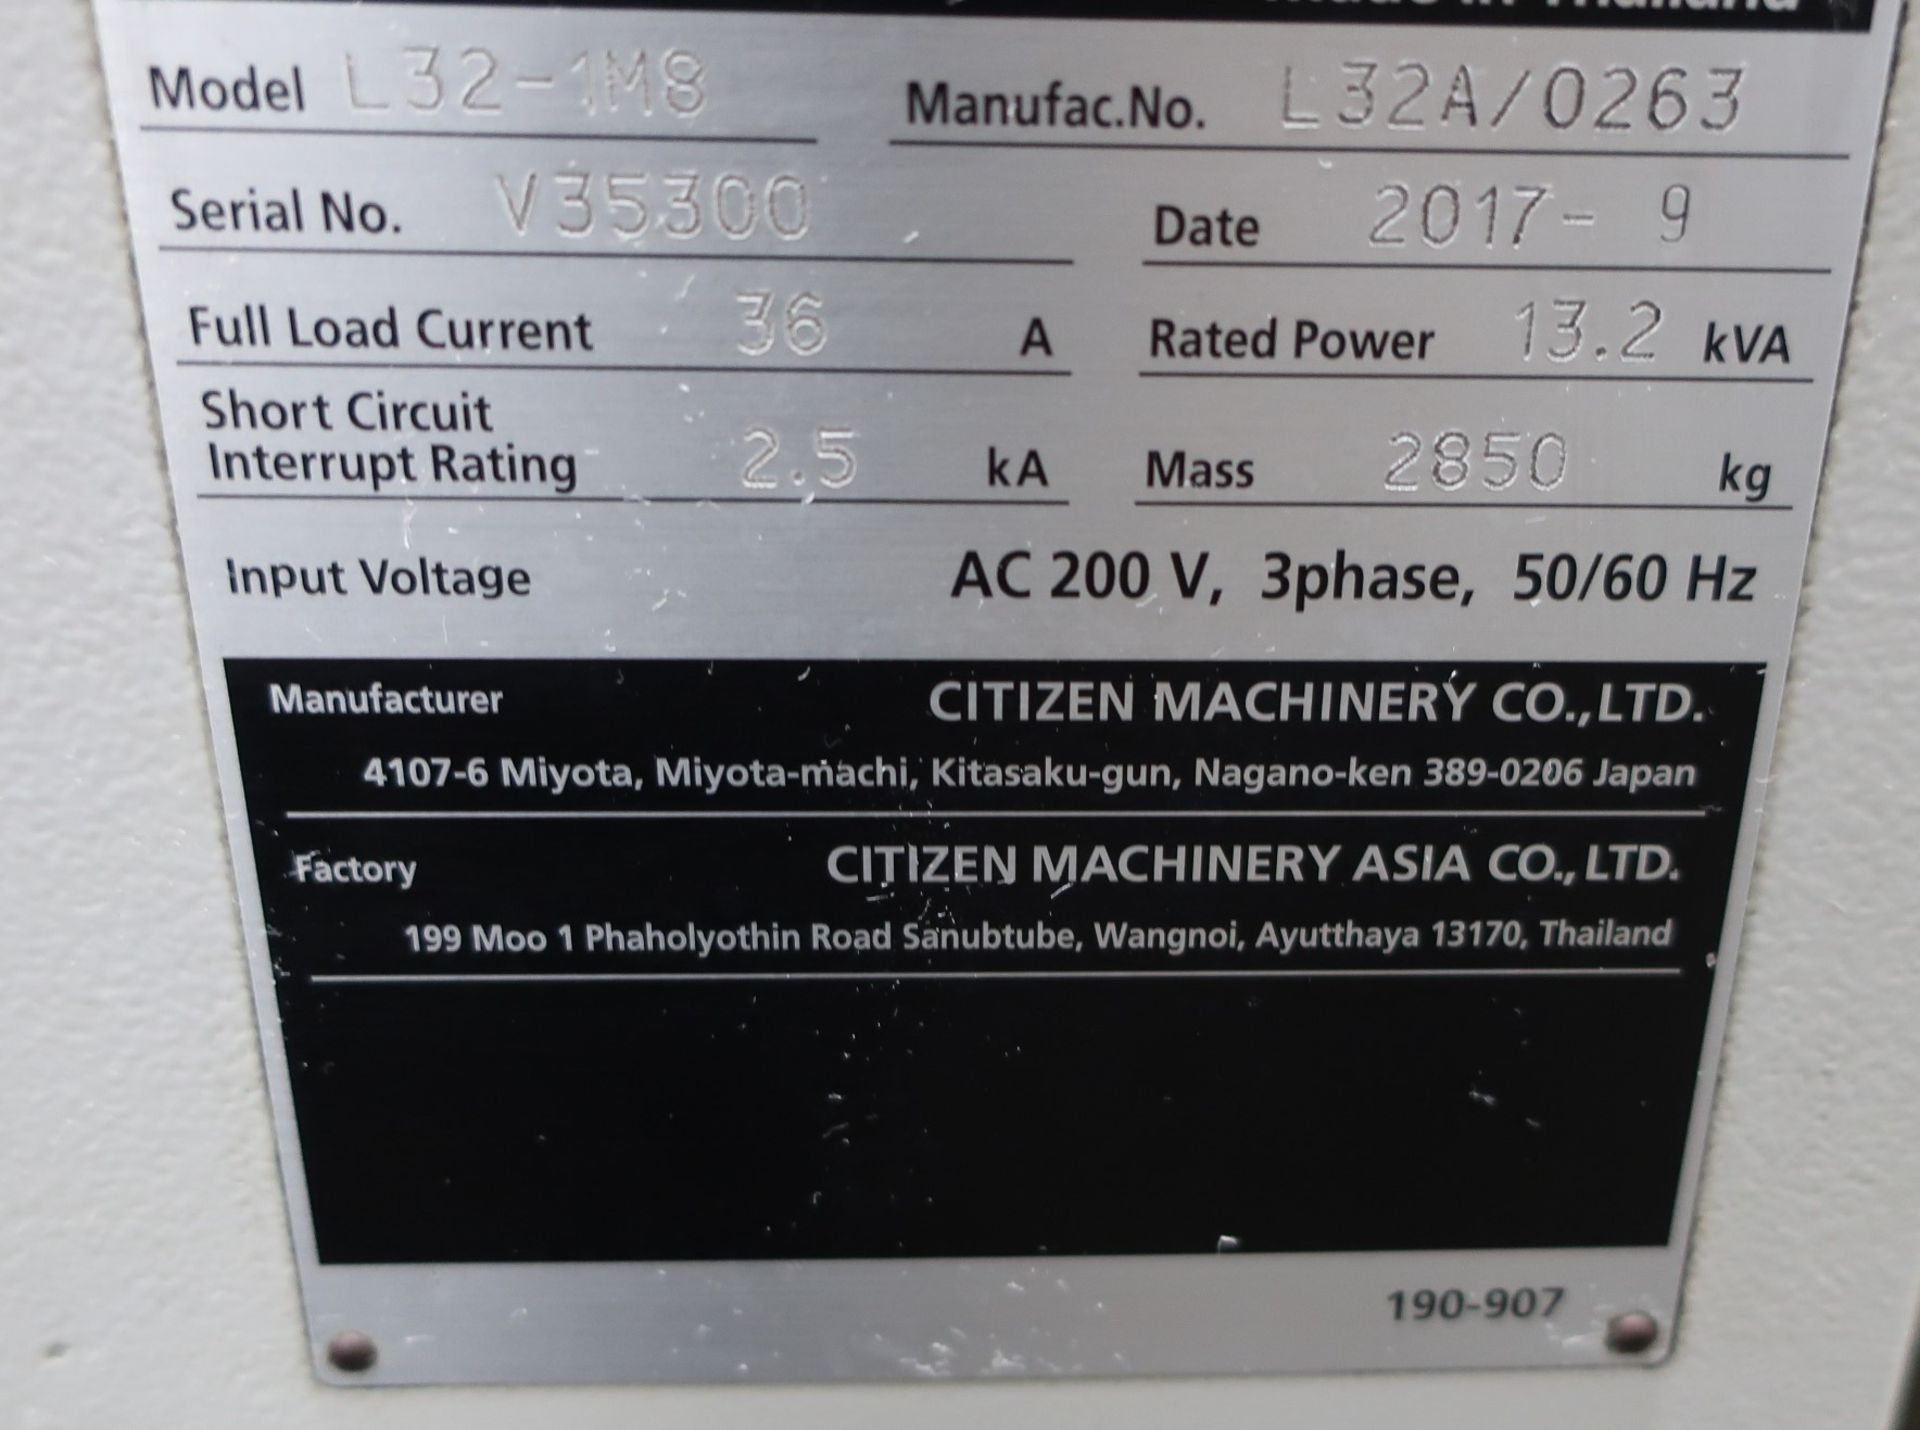 32MM CITIZEN CINCOM L32-1M8 CNC SWISS TYPE AUTOMATIC SCREW MACHINE - Image 17 of 18